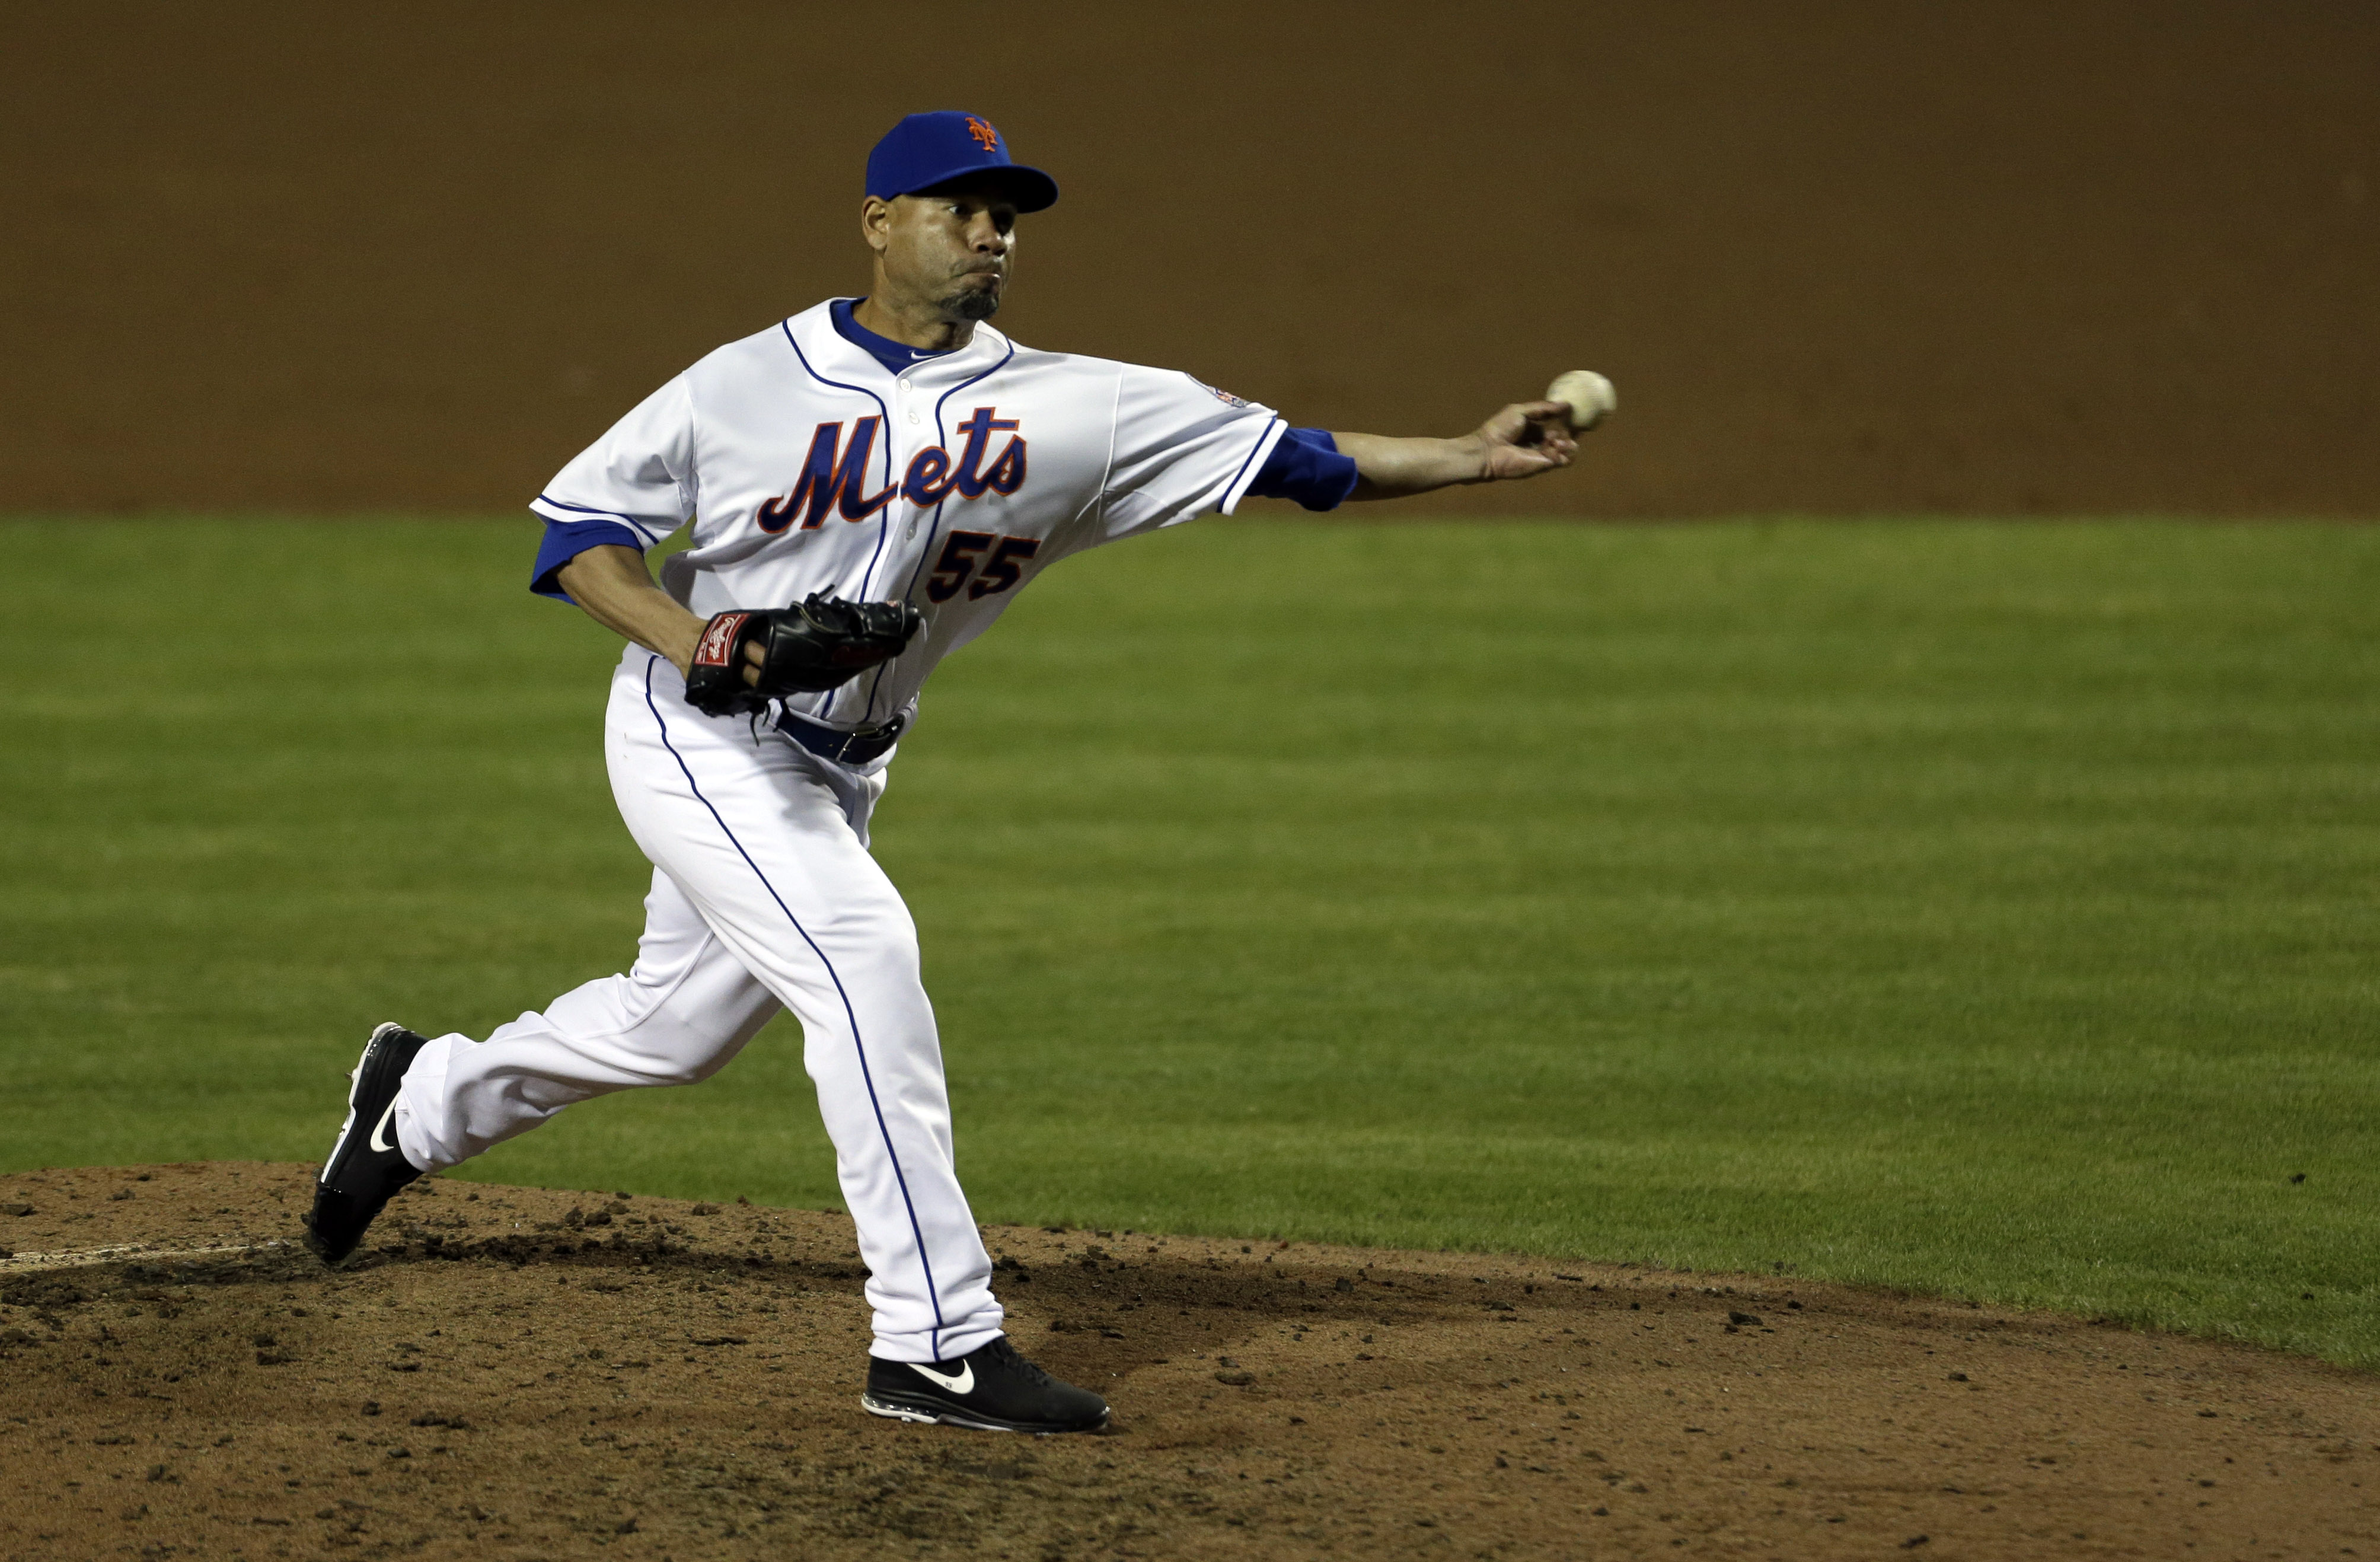 Feliciano leaves Mets for Yankees